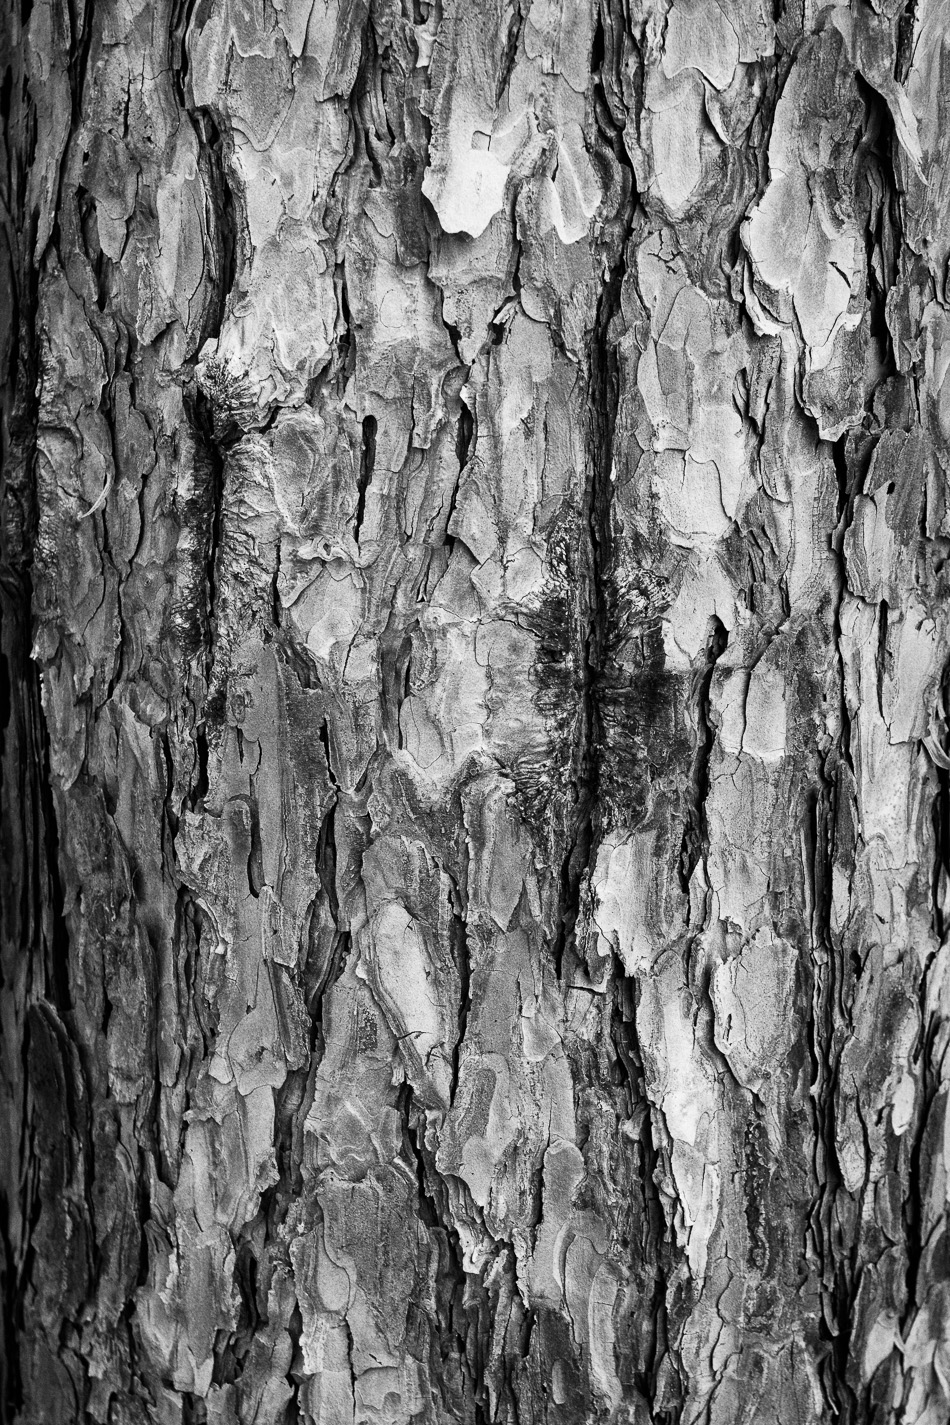 Black and white photo of tree bark detail